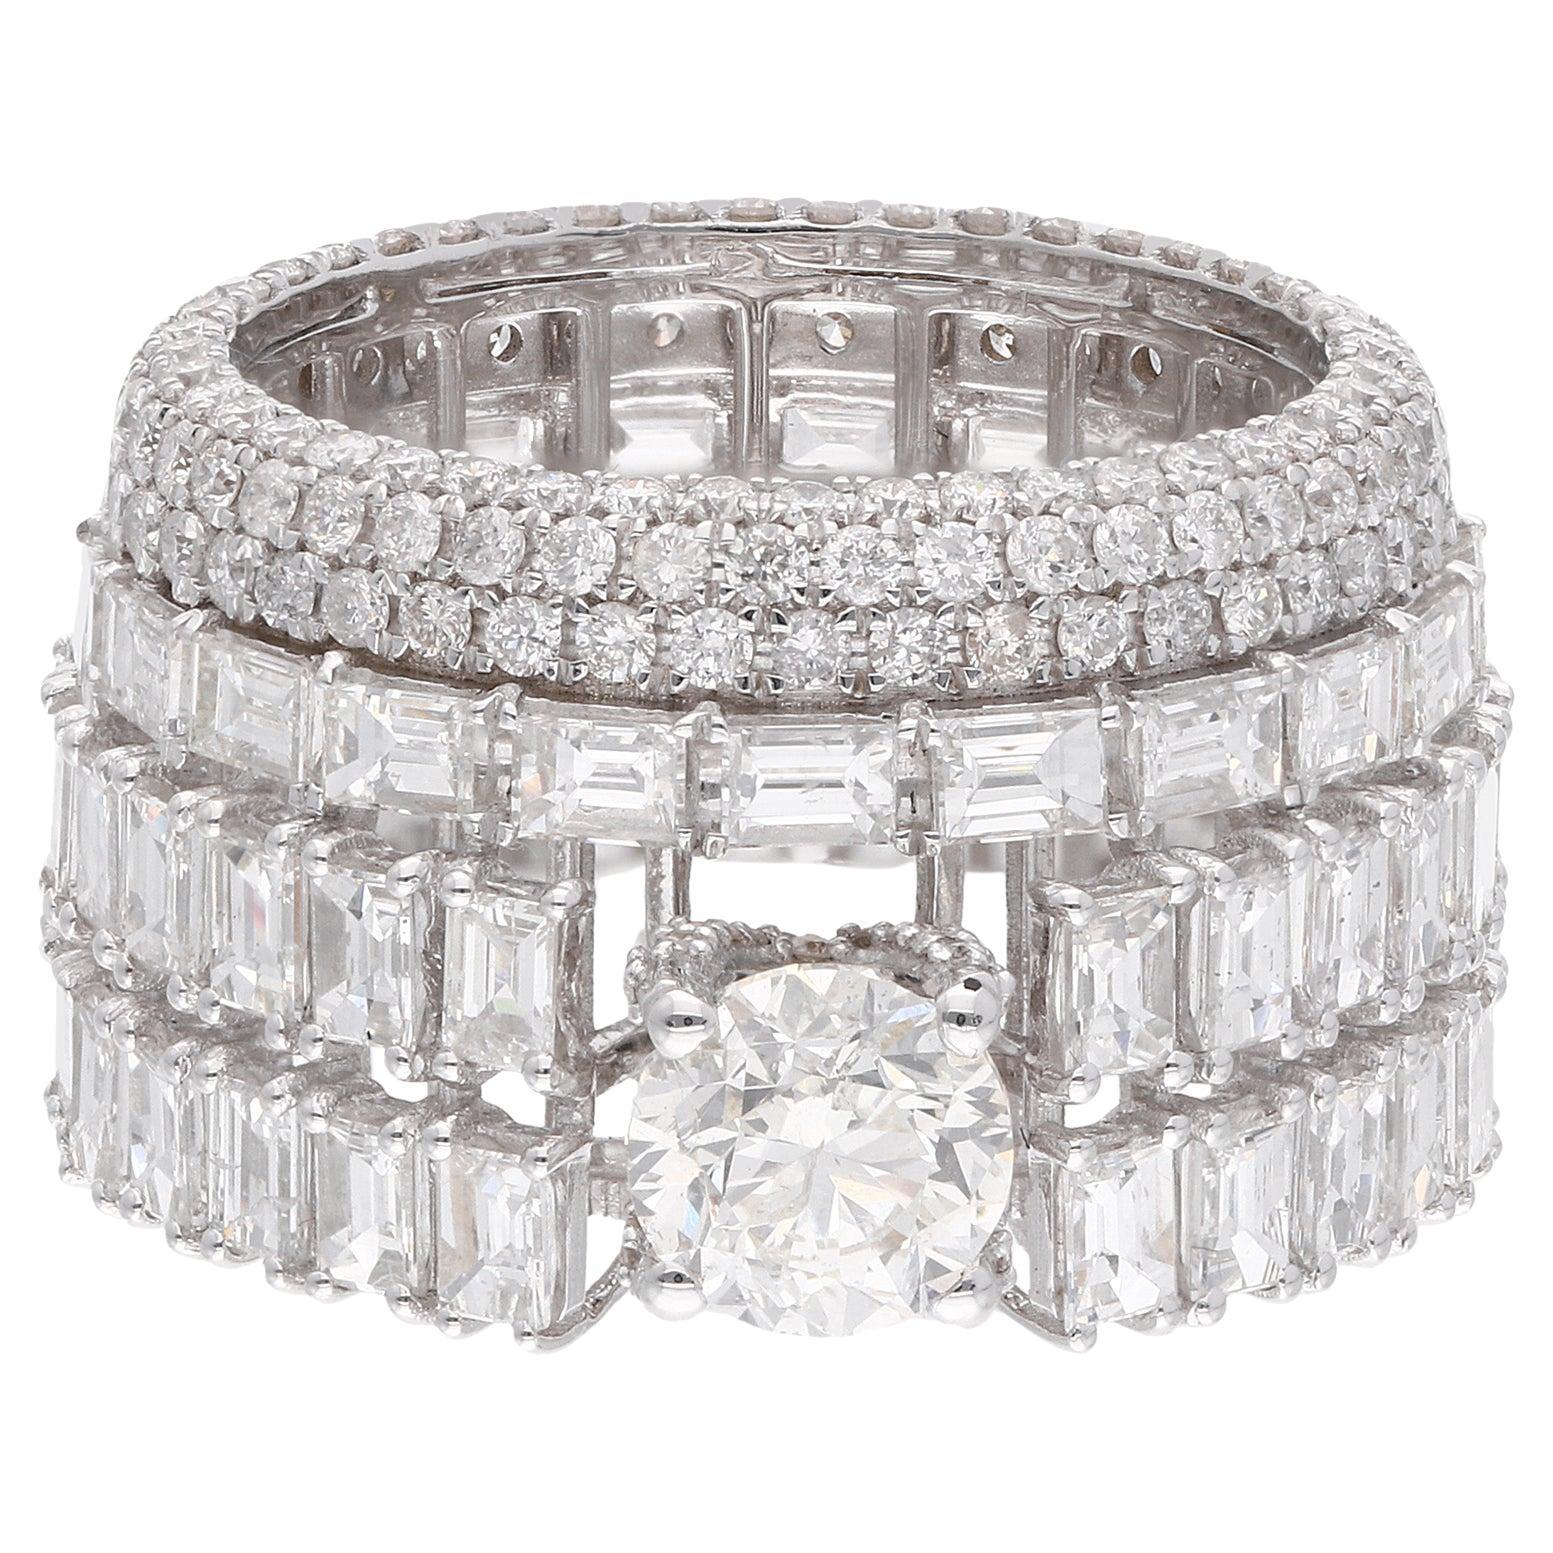 For Sale:  7.3 Carat SI Clarity HI Color Round Emerald Cut Diamond Ring 18 Karat White Gold